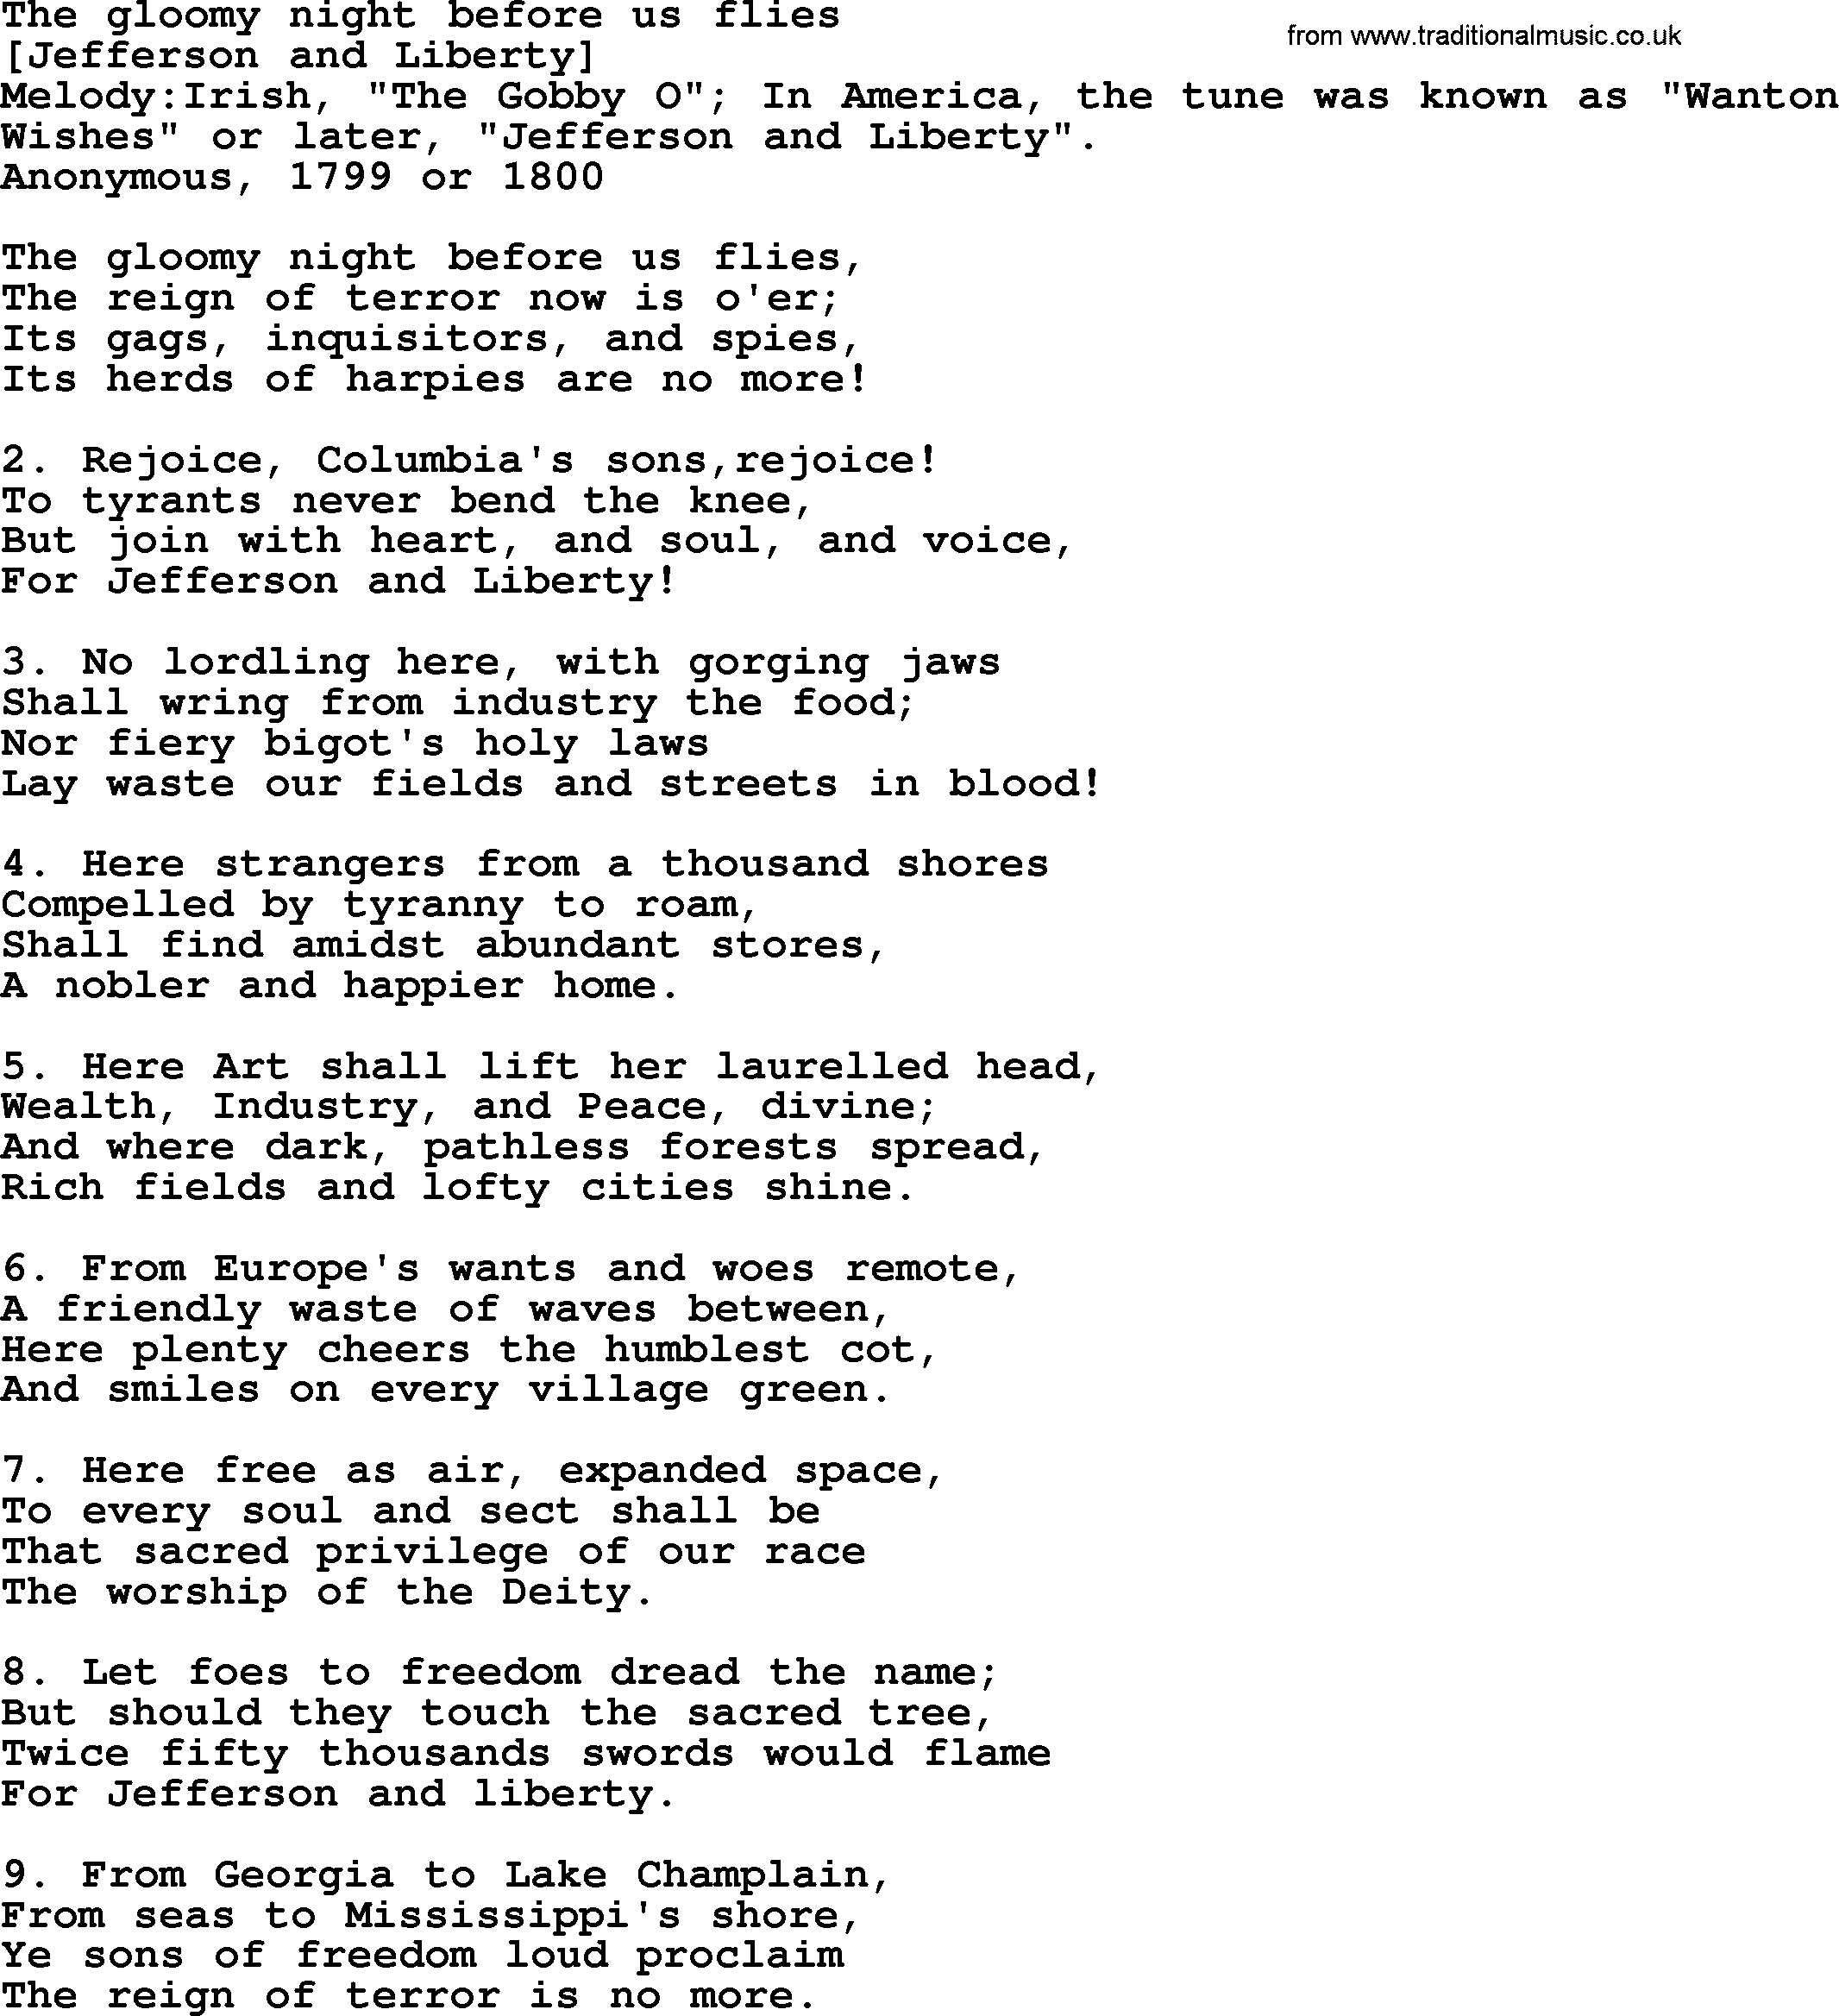 Old American Song: The Gloomy Night Before Us Flies, lyrics